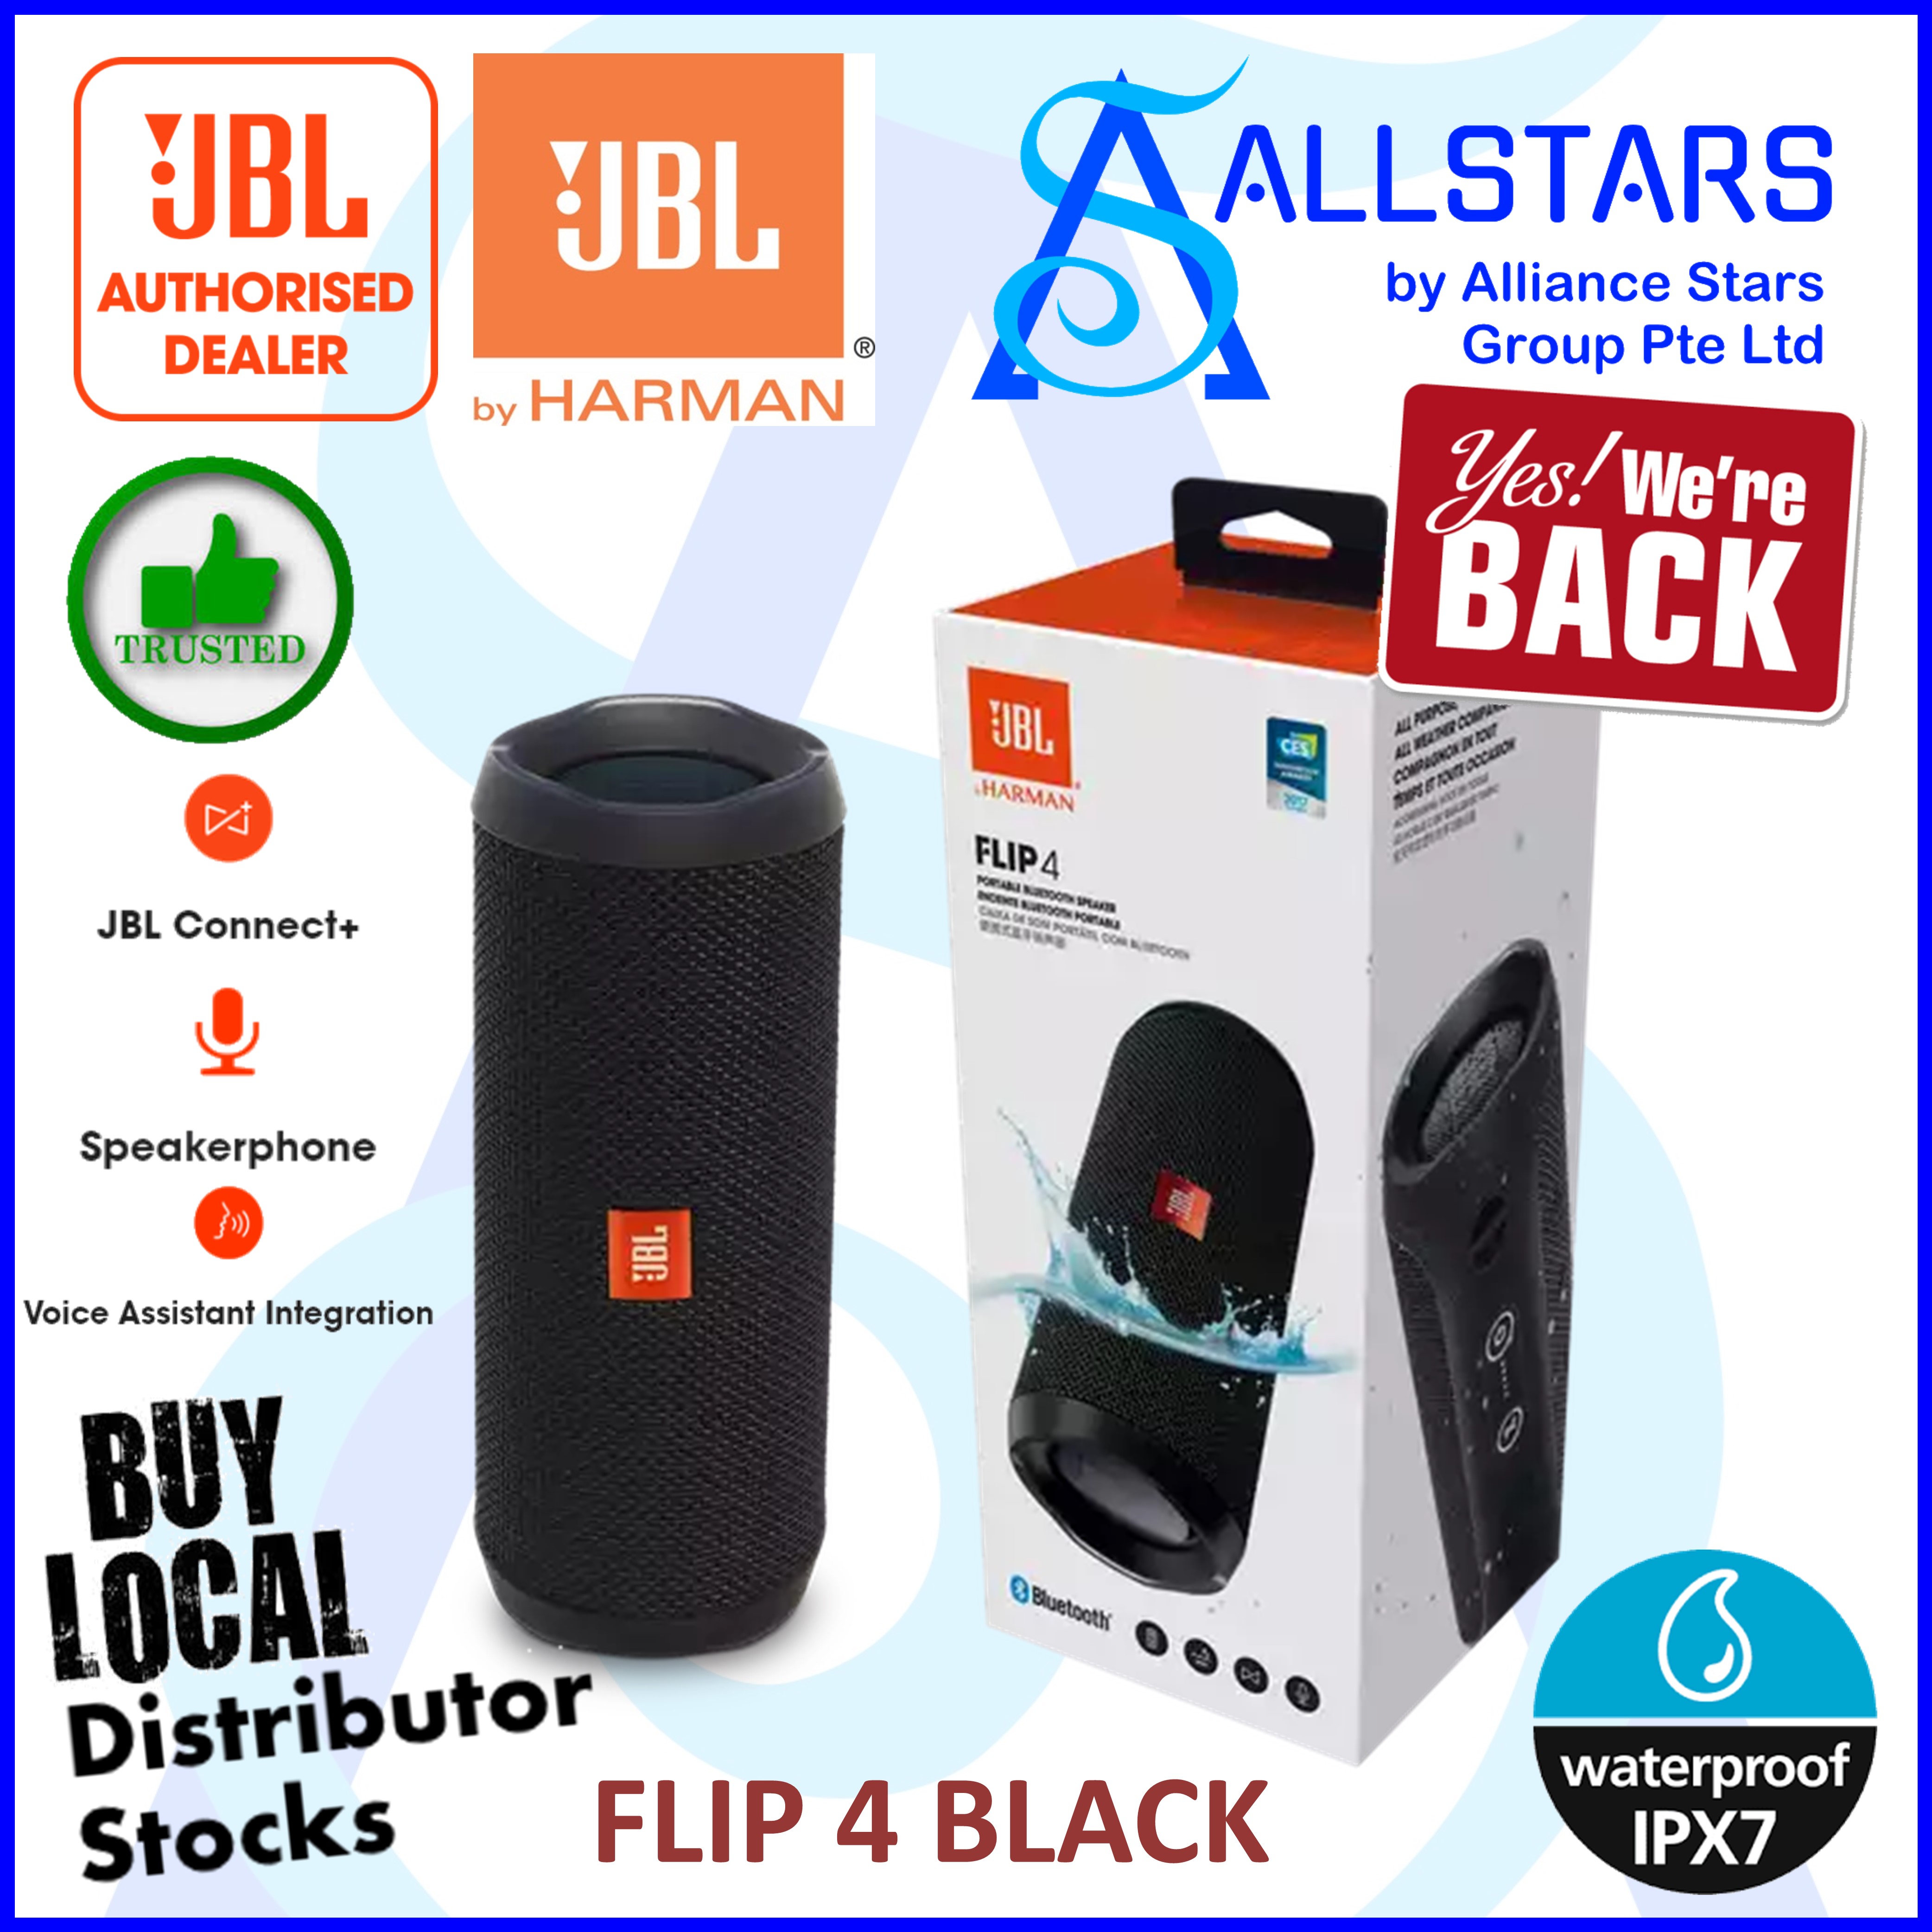 Næste budget Junior ALLSTARS : We Are Back Promo) JBL Black Flip 4 Portable Bluetooth Speaker  (JBLFLIP4BLK) (Warranty 1year with Local Distributor IMS) | Lazada Singapore